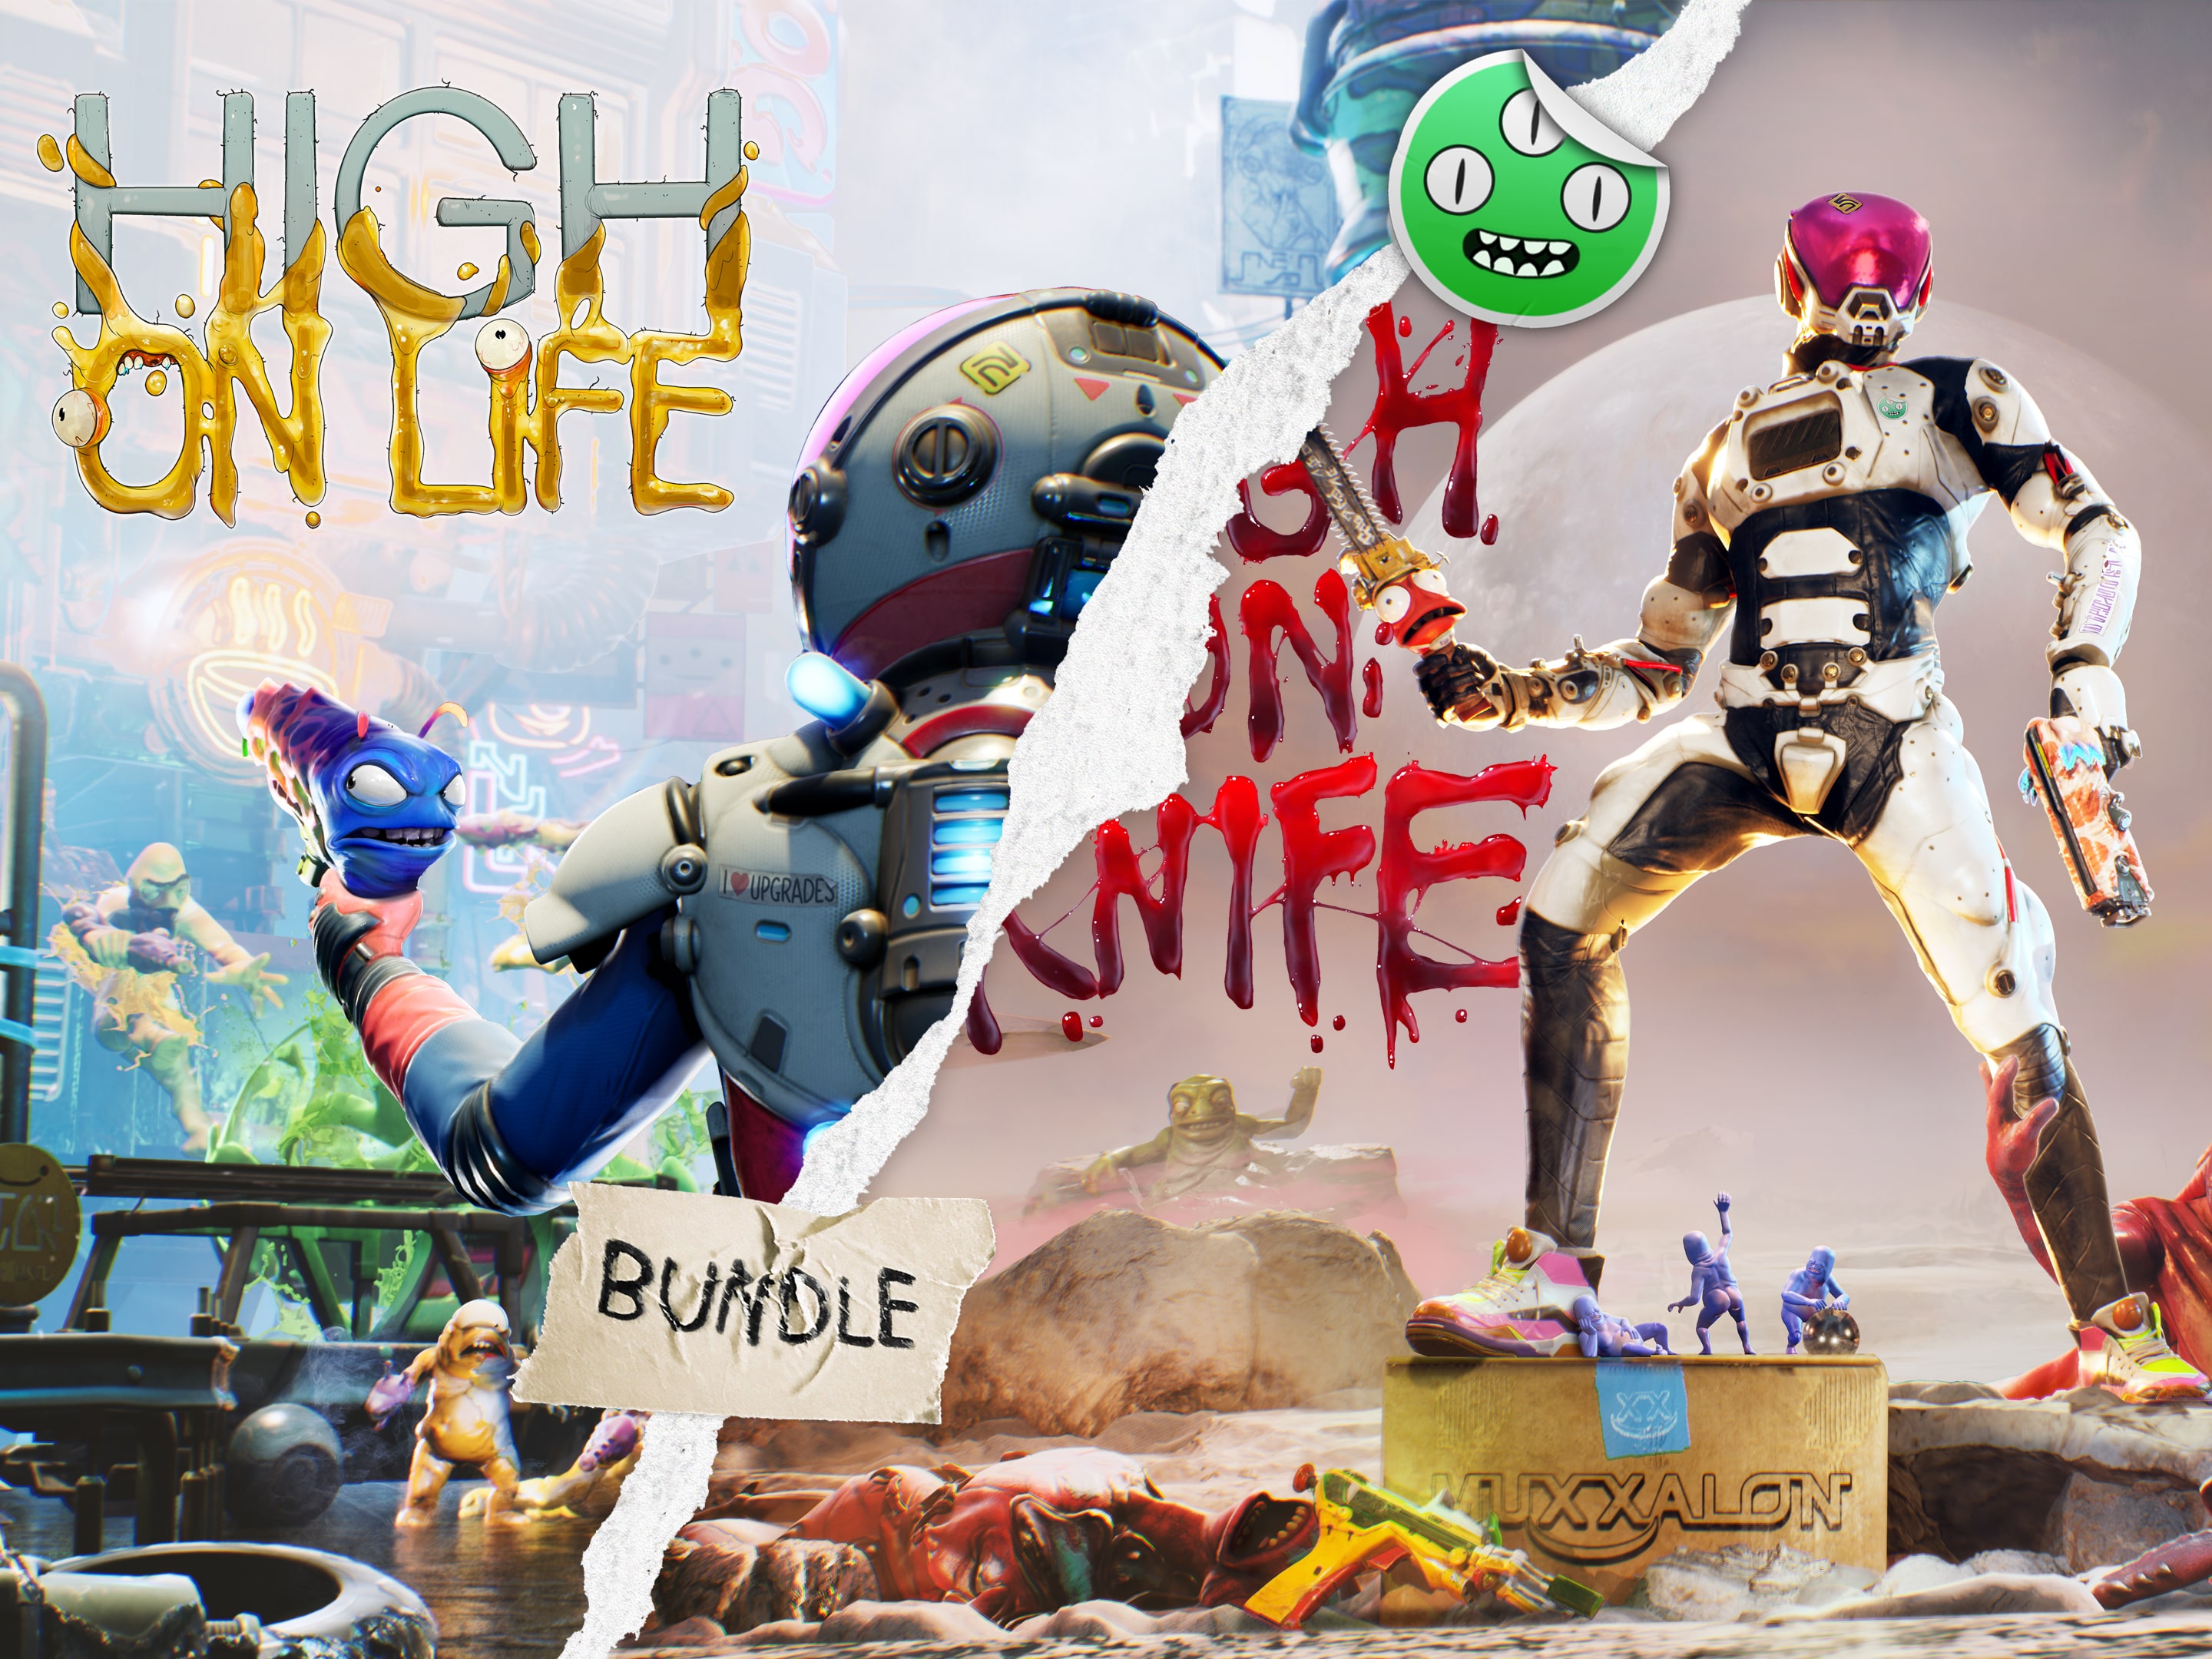 High on Life: DLC Bundle CD Key for Xbox / Windows 10 (Digital Download)